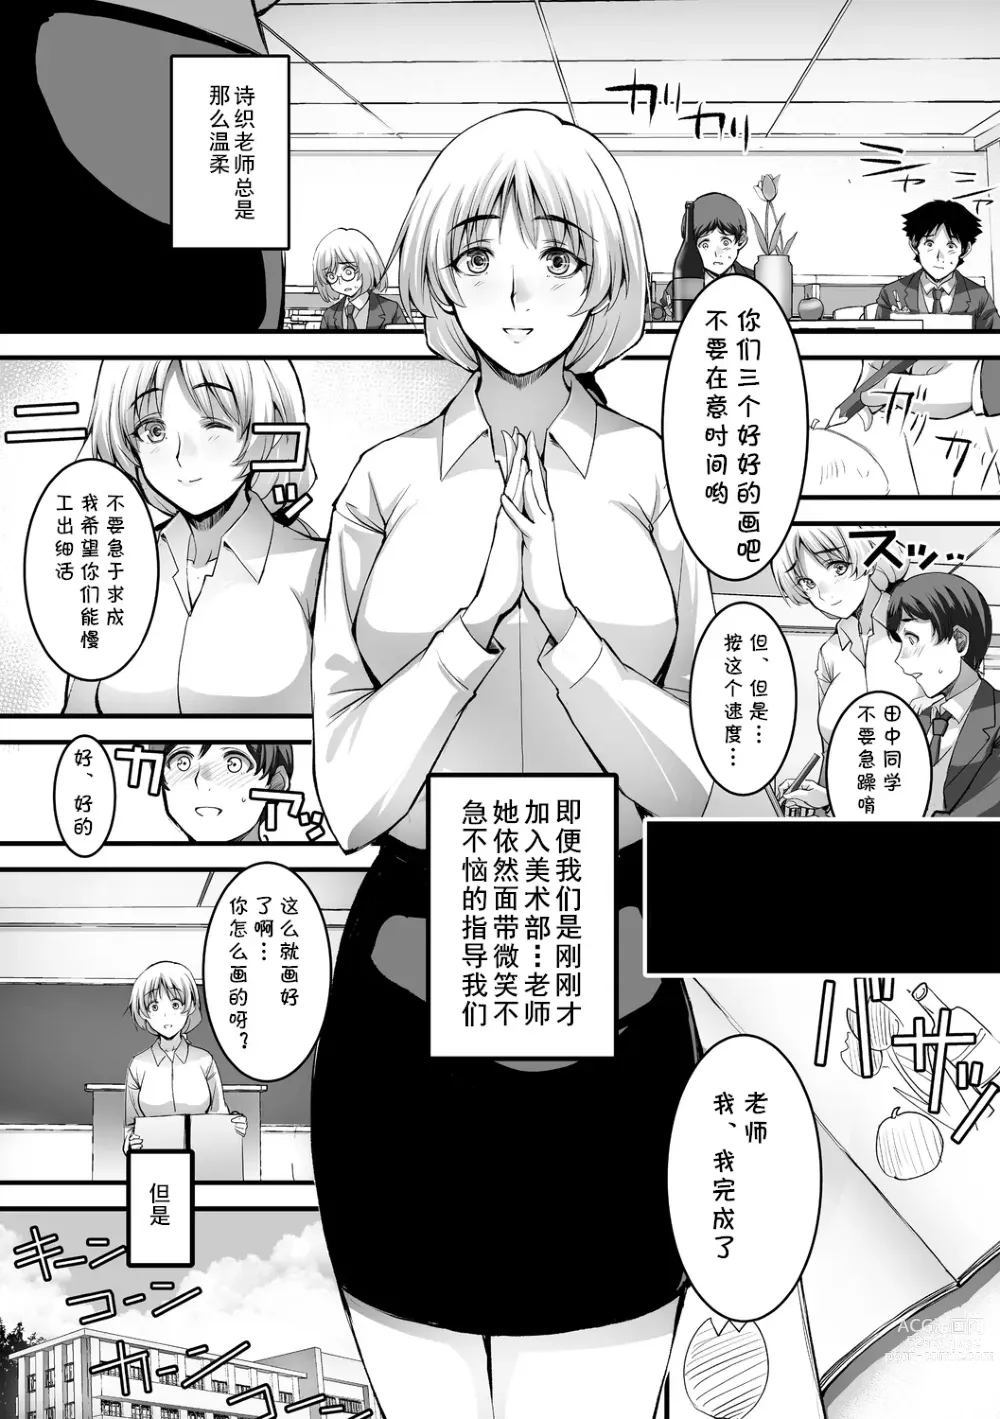 Page 5 of manga Shiori Sensei no Kagai Jugyou